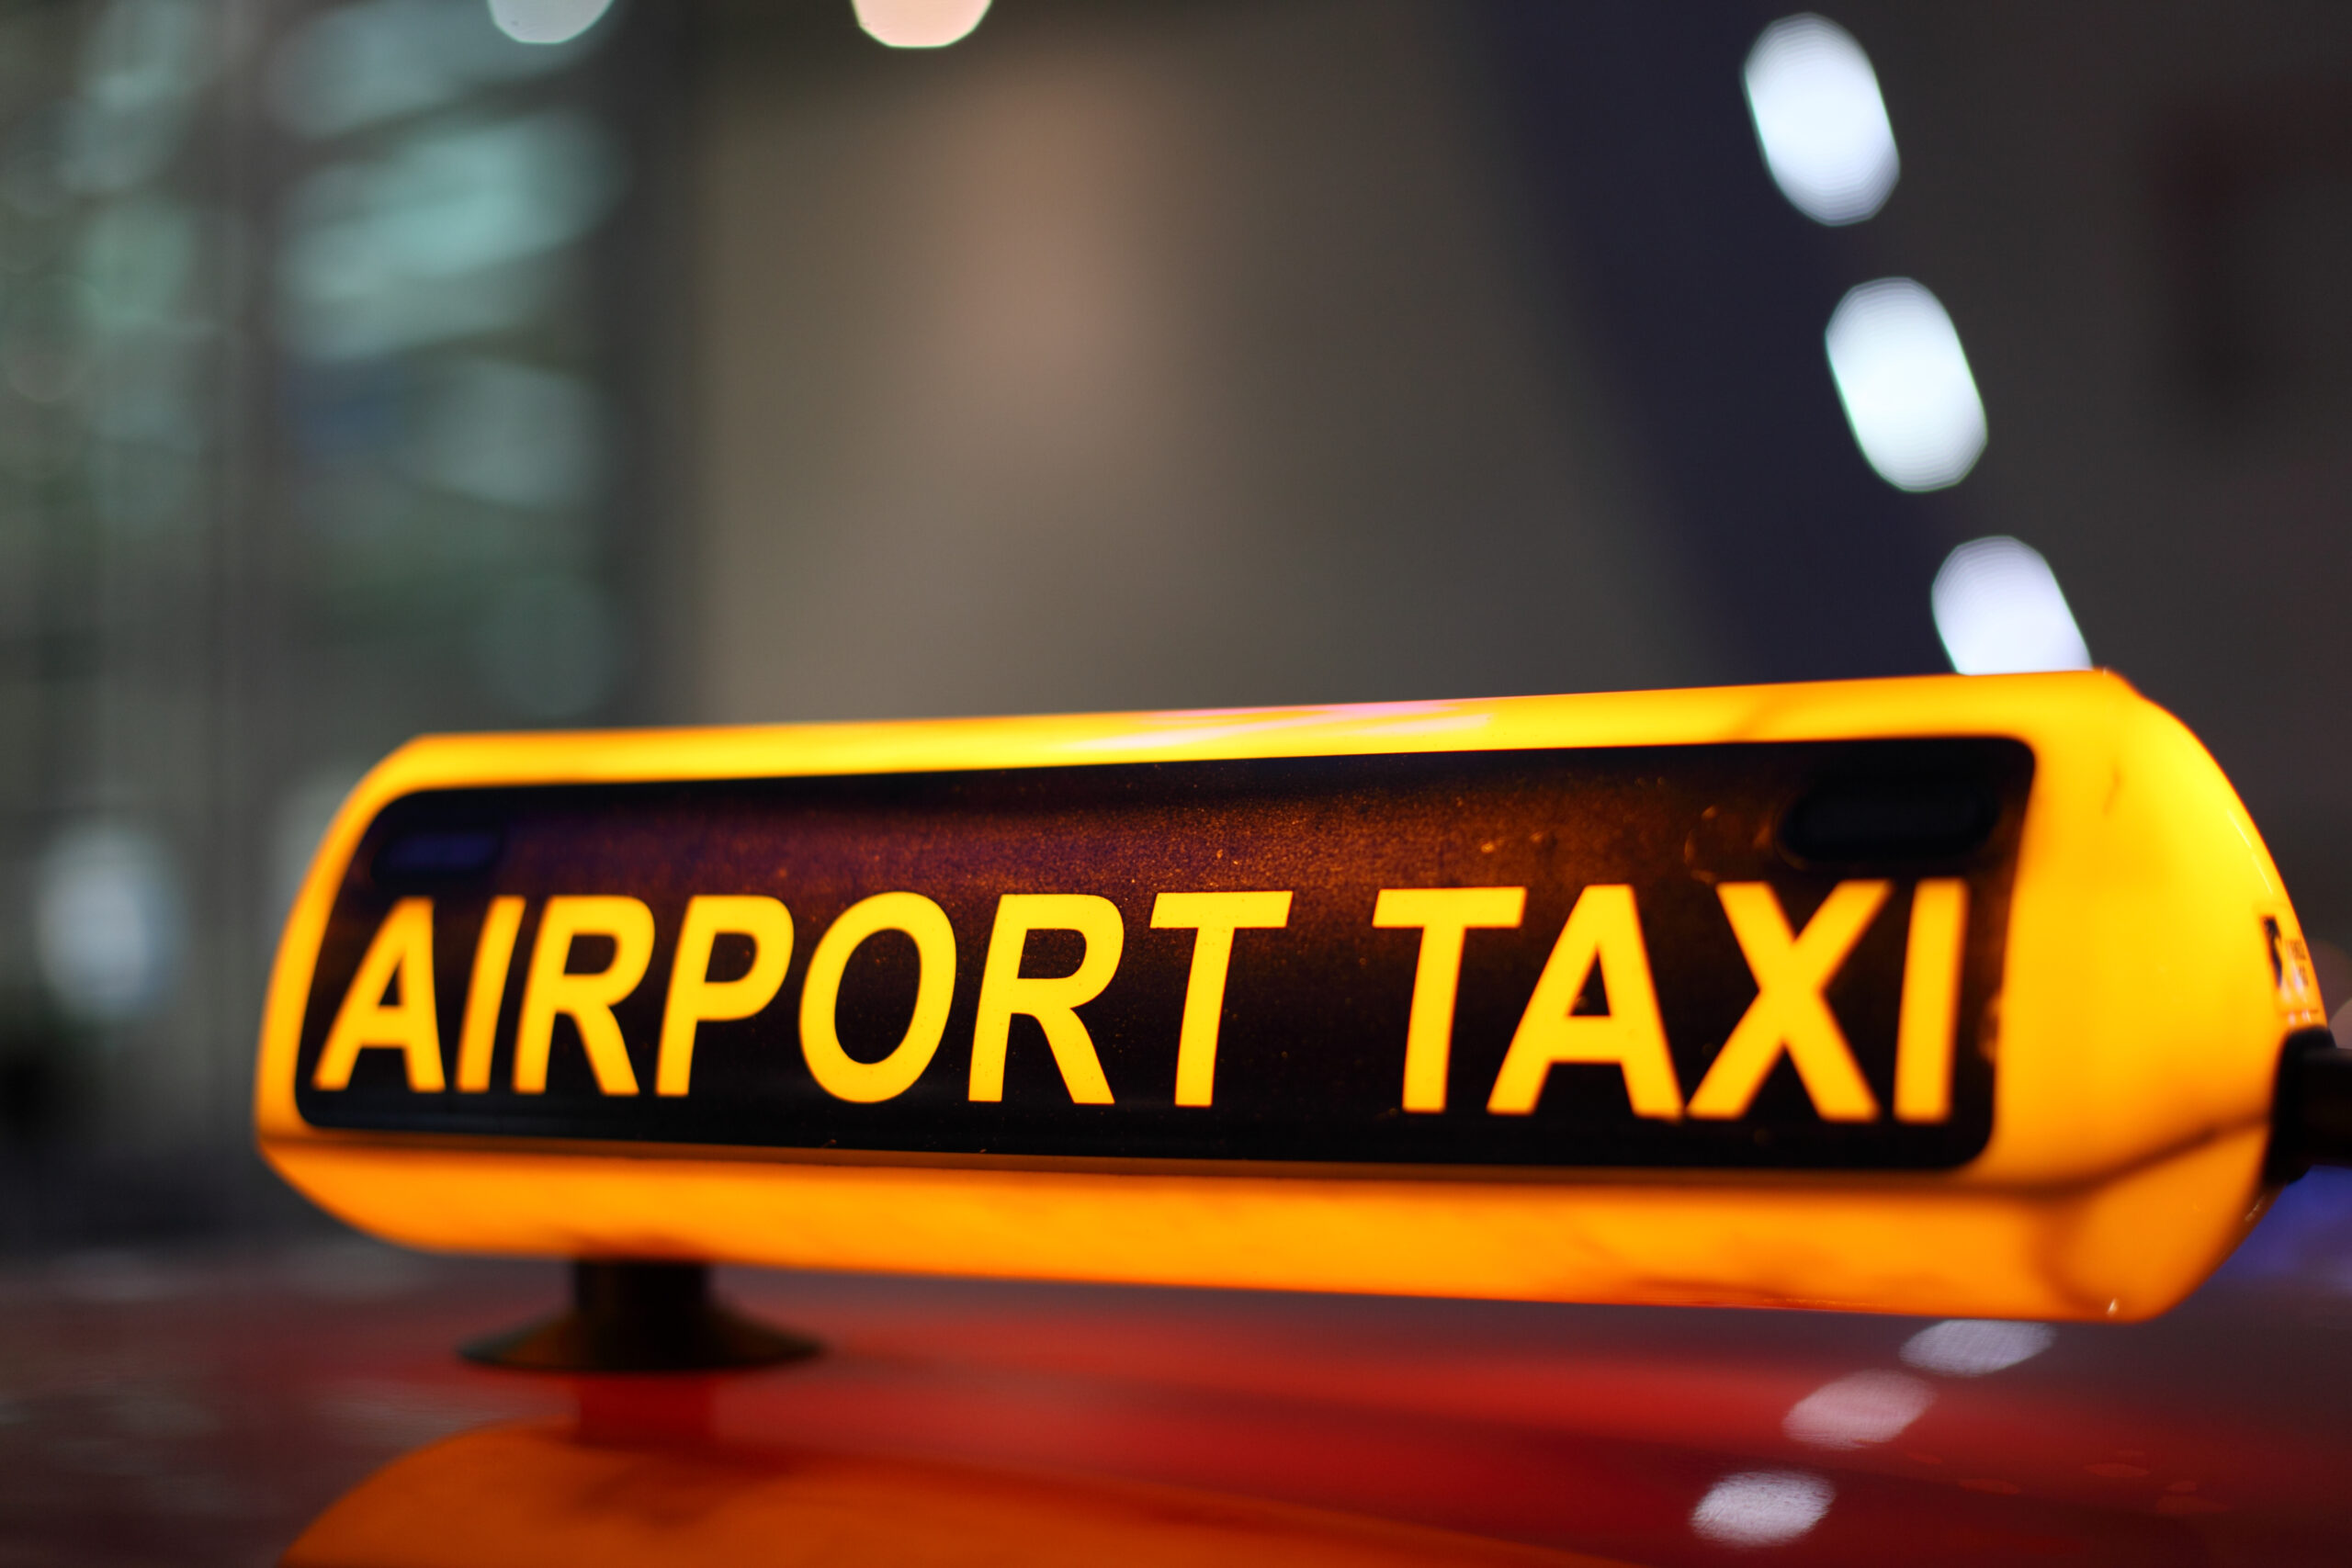 Dubai Taxi - Airport taxi